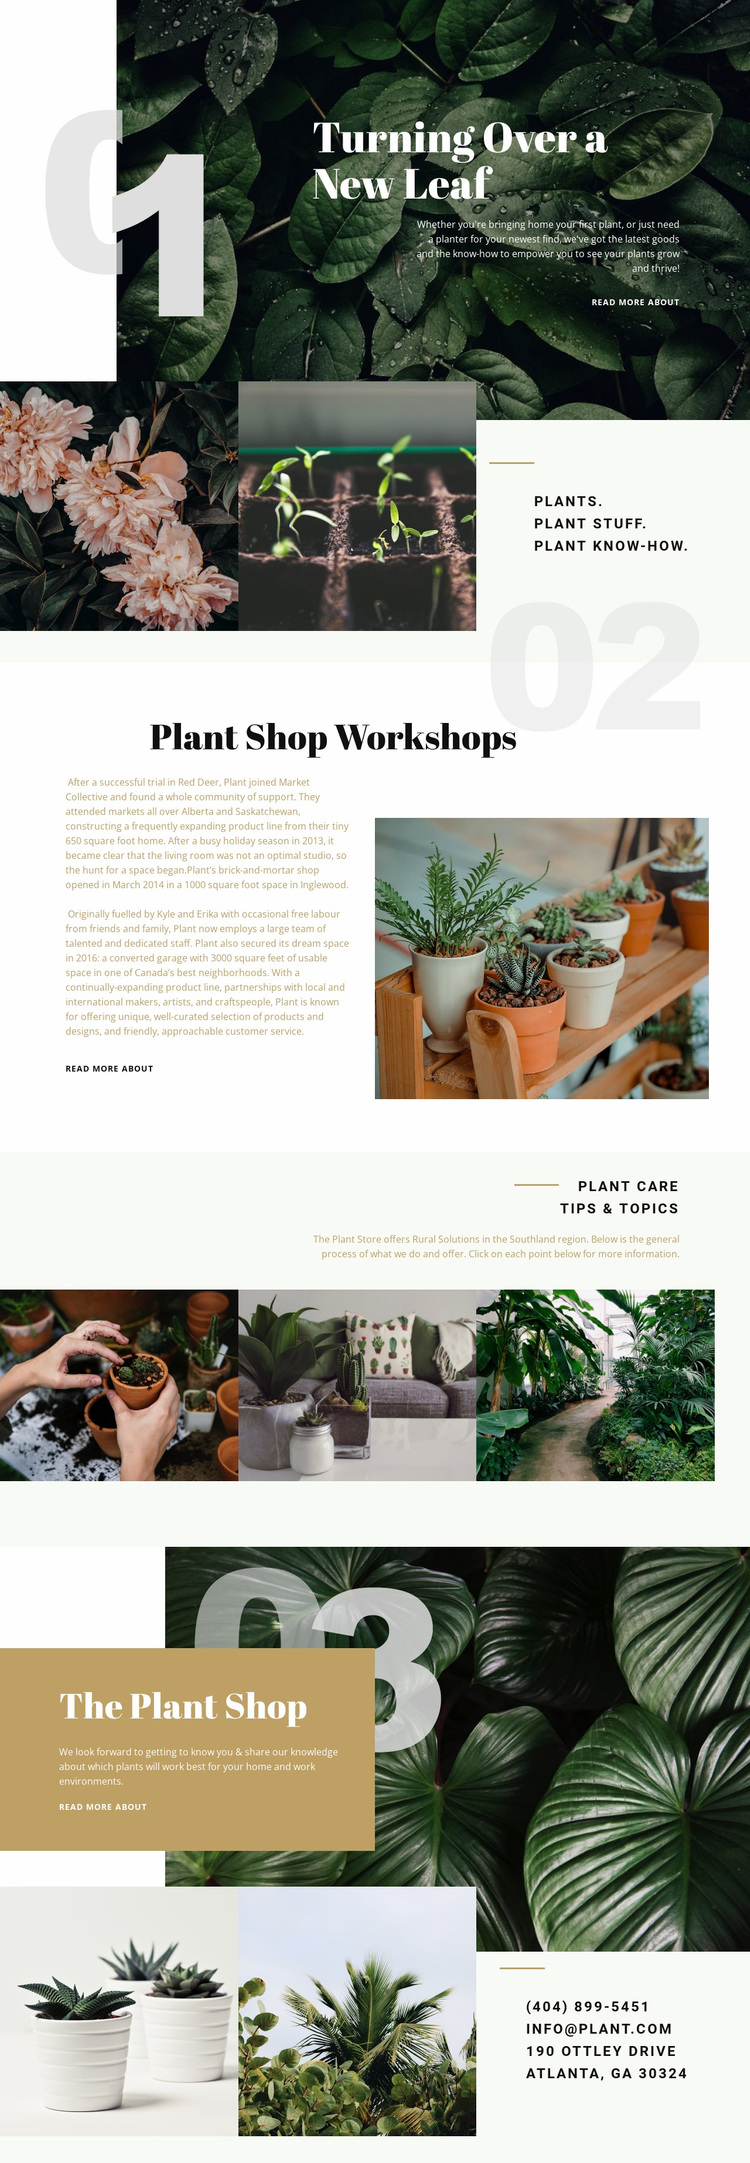 Plant Shop Website Design